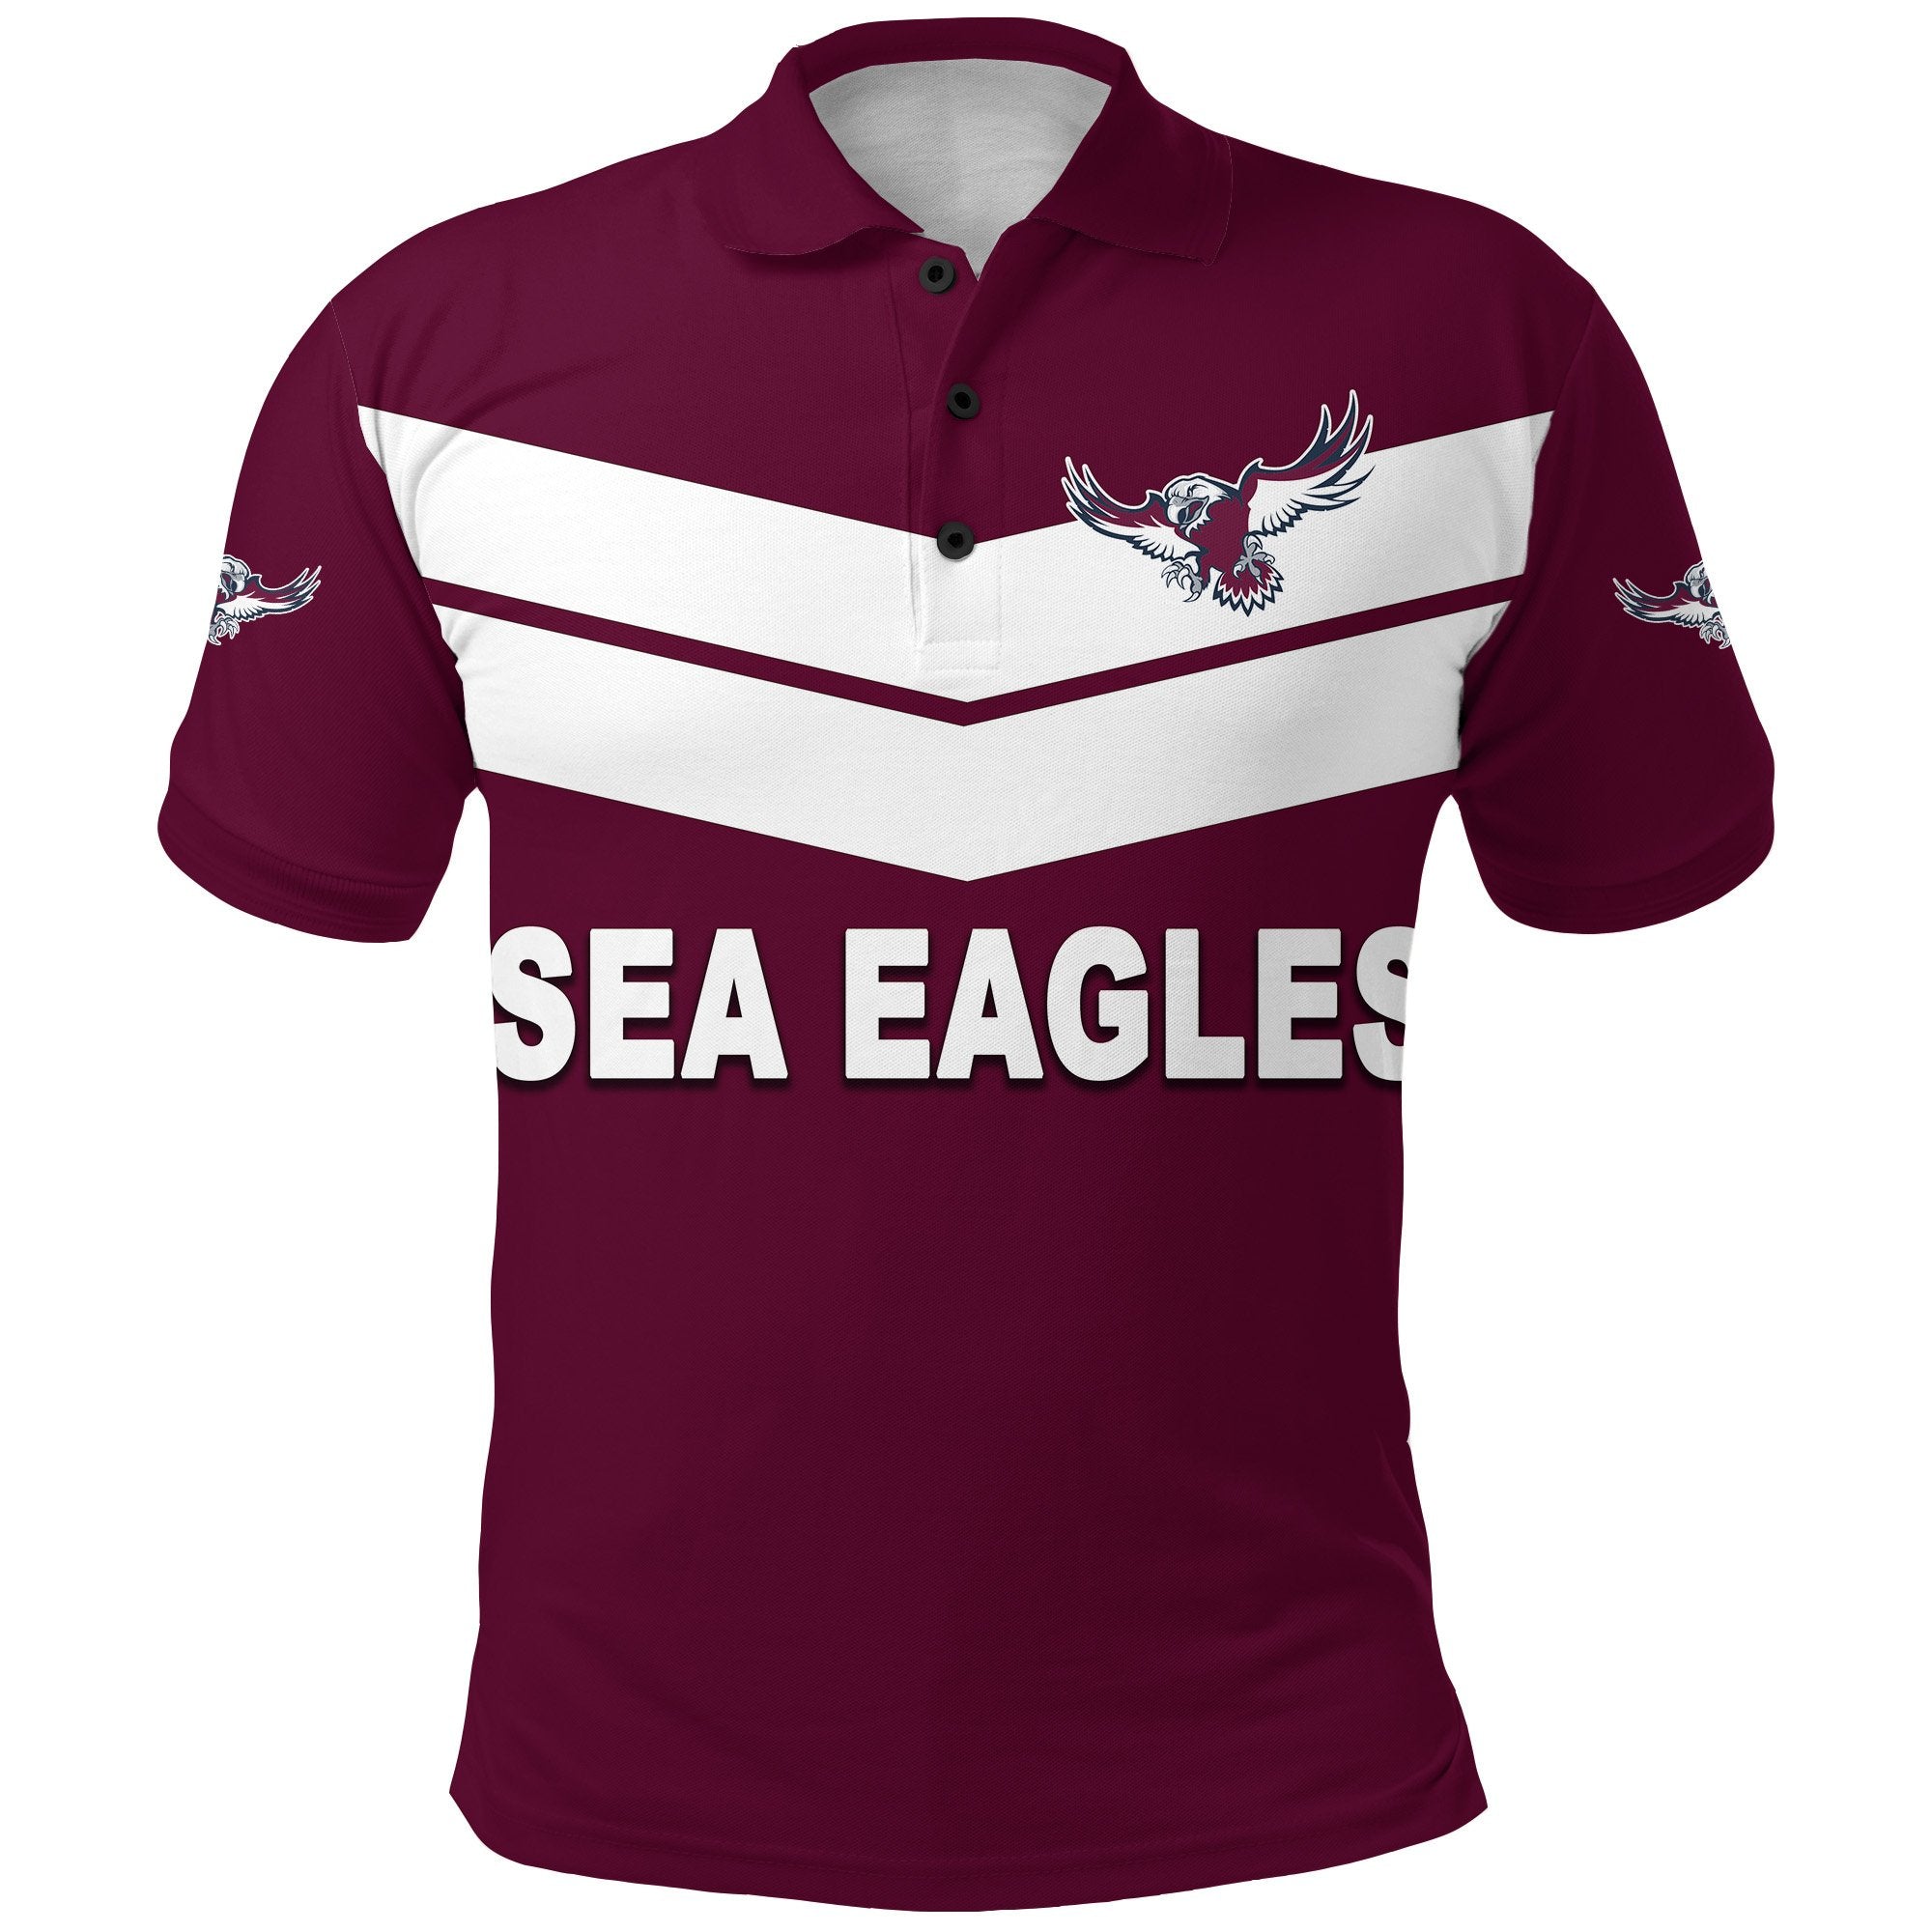 warringah-polo-shirt-sea-eagles-original